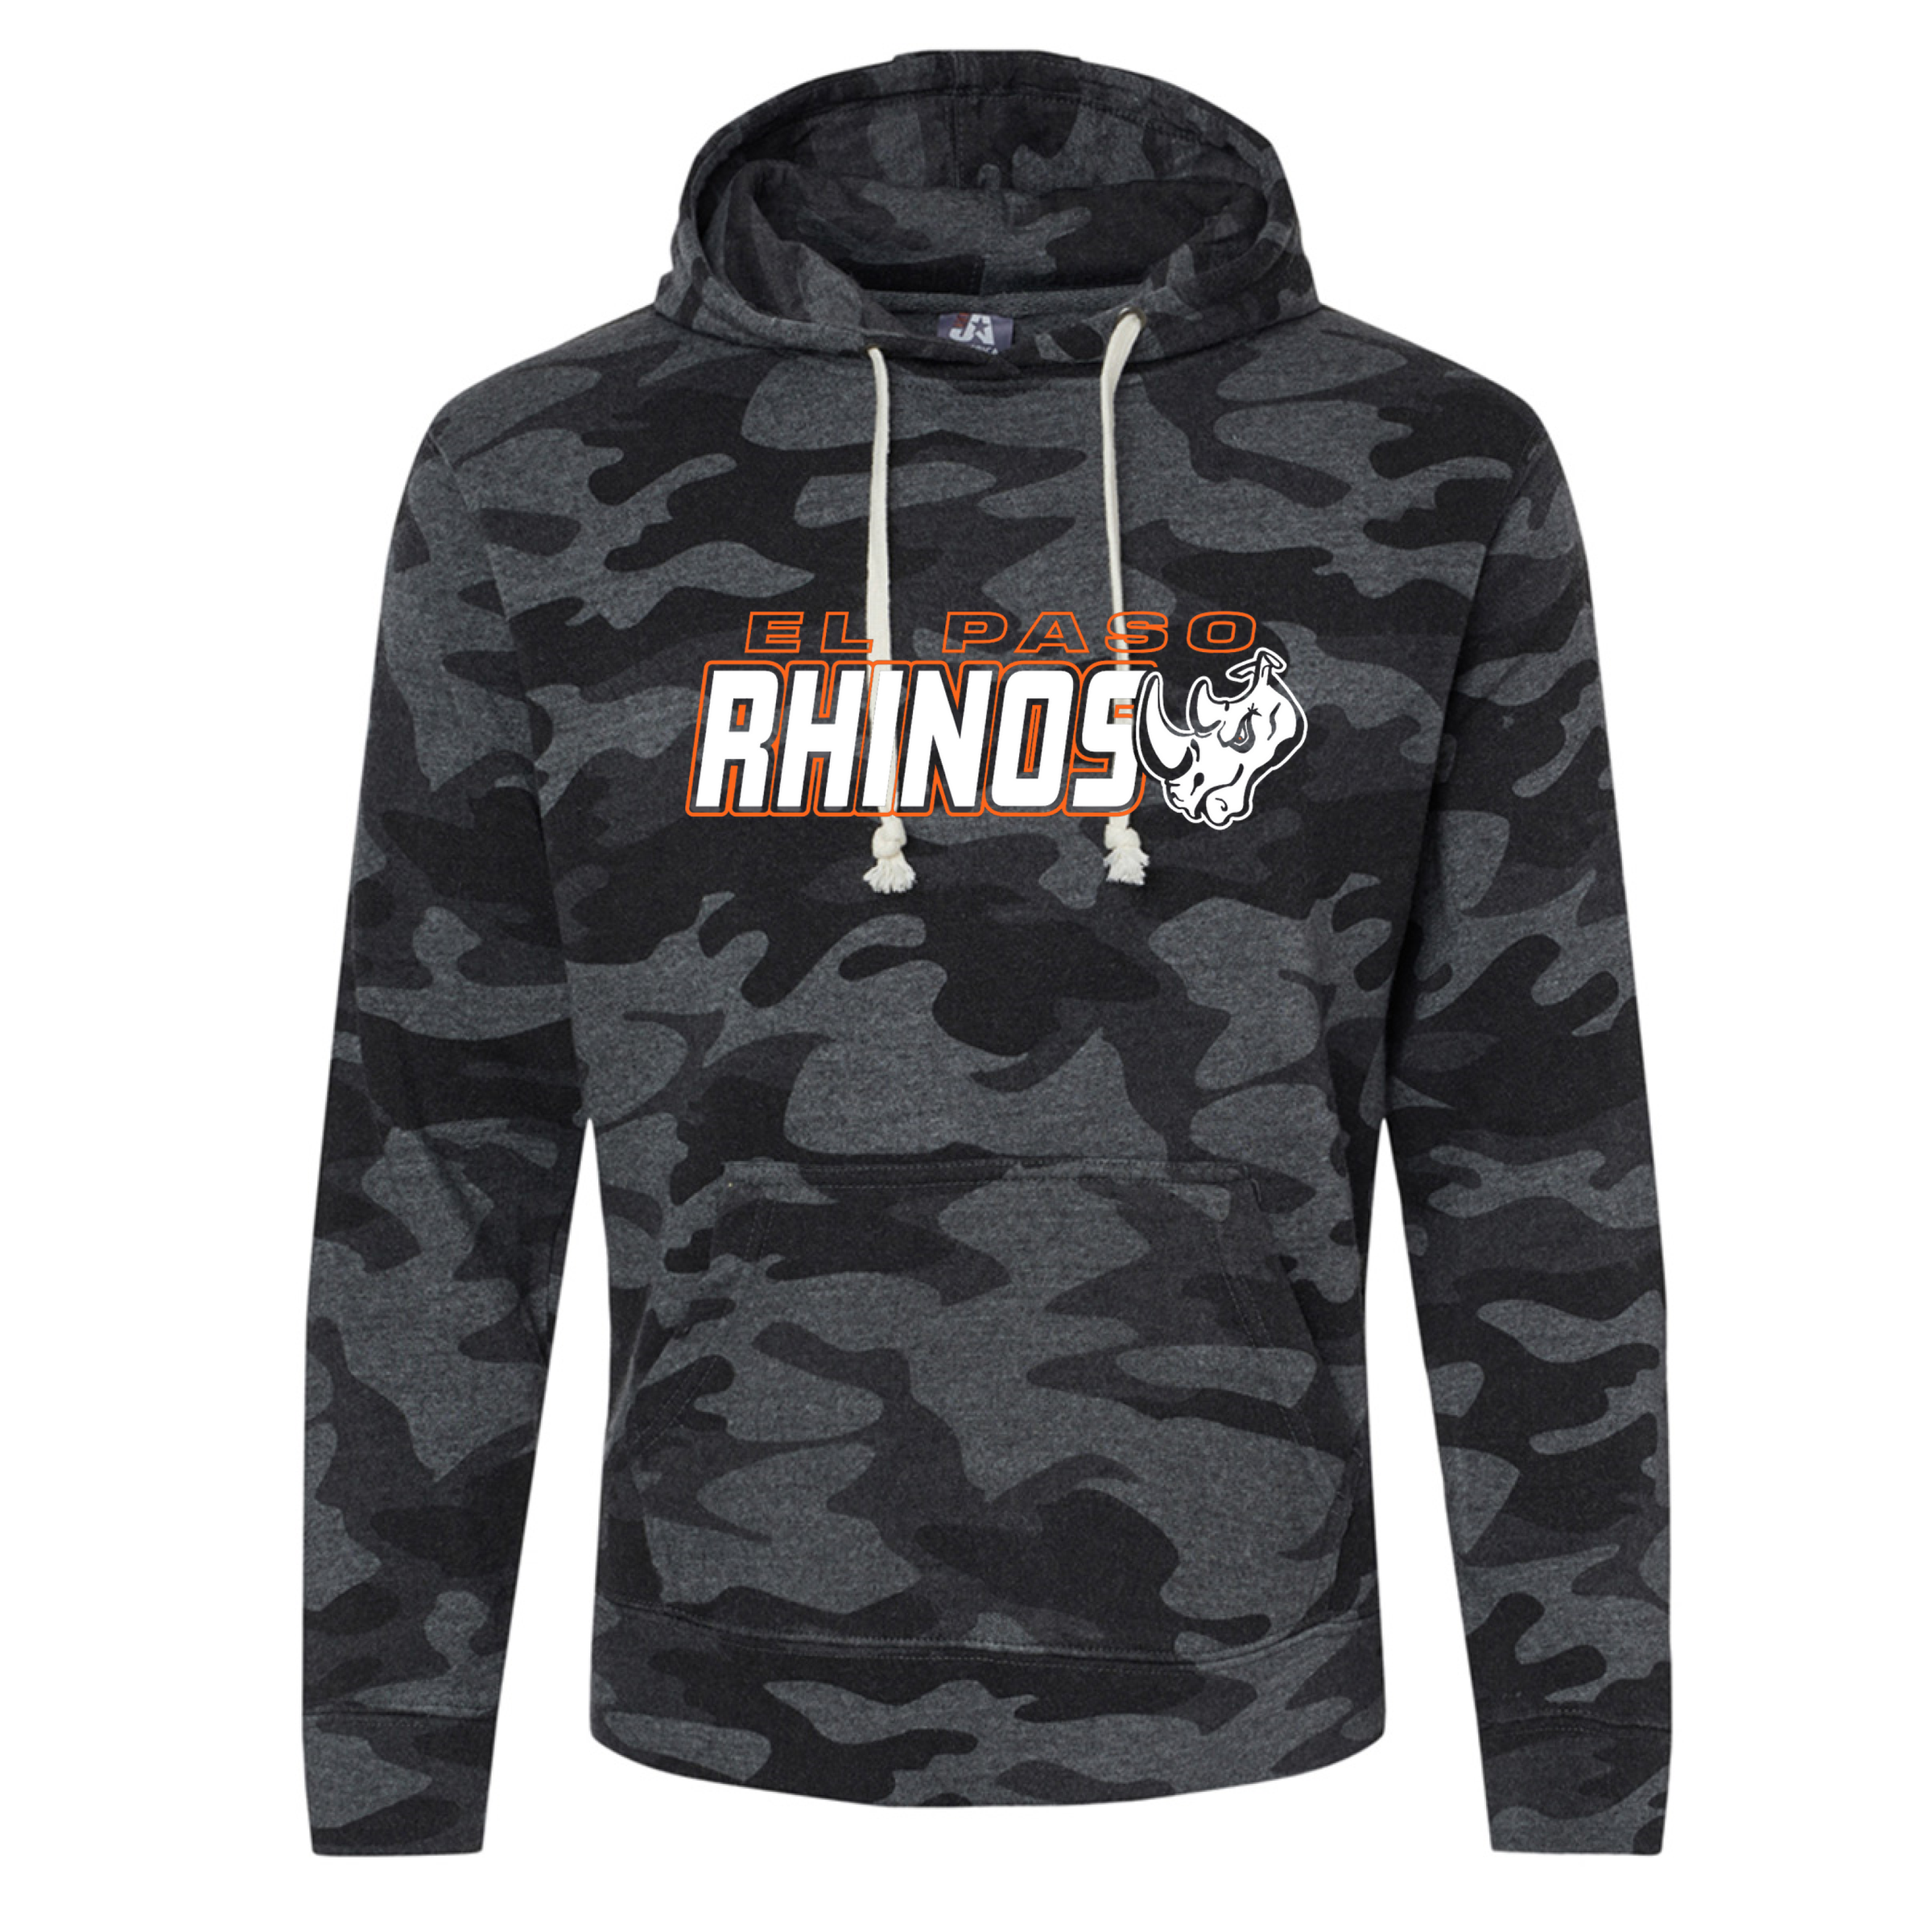 Rhinos hockey team auctions jerseys for Child Crisis Center of El Paso